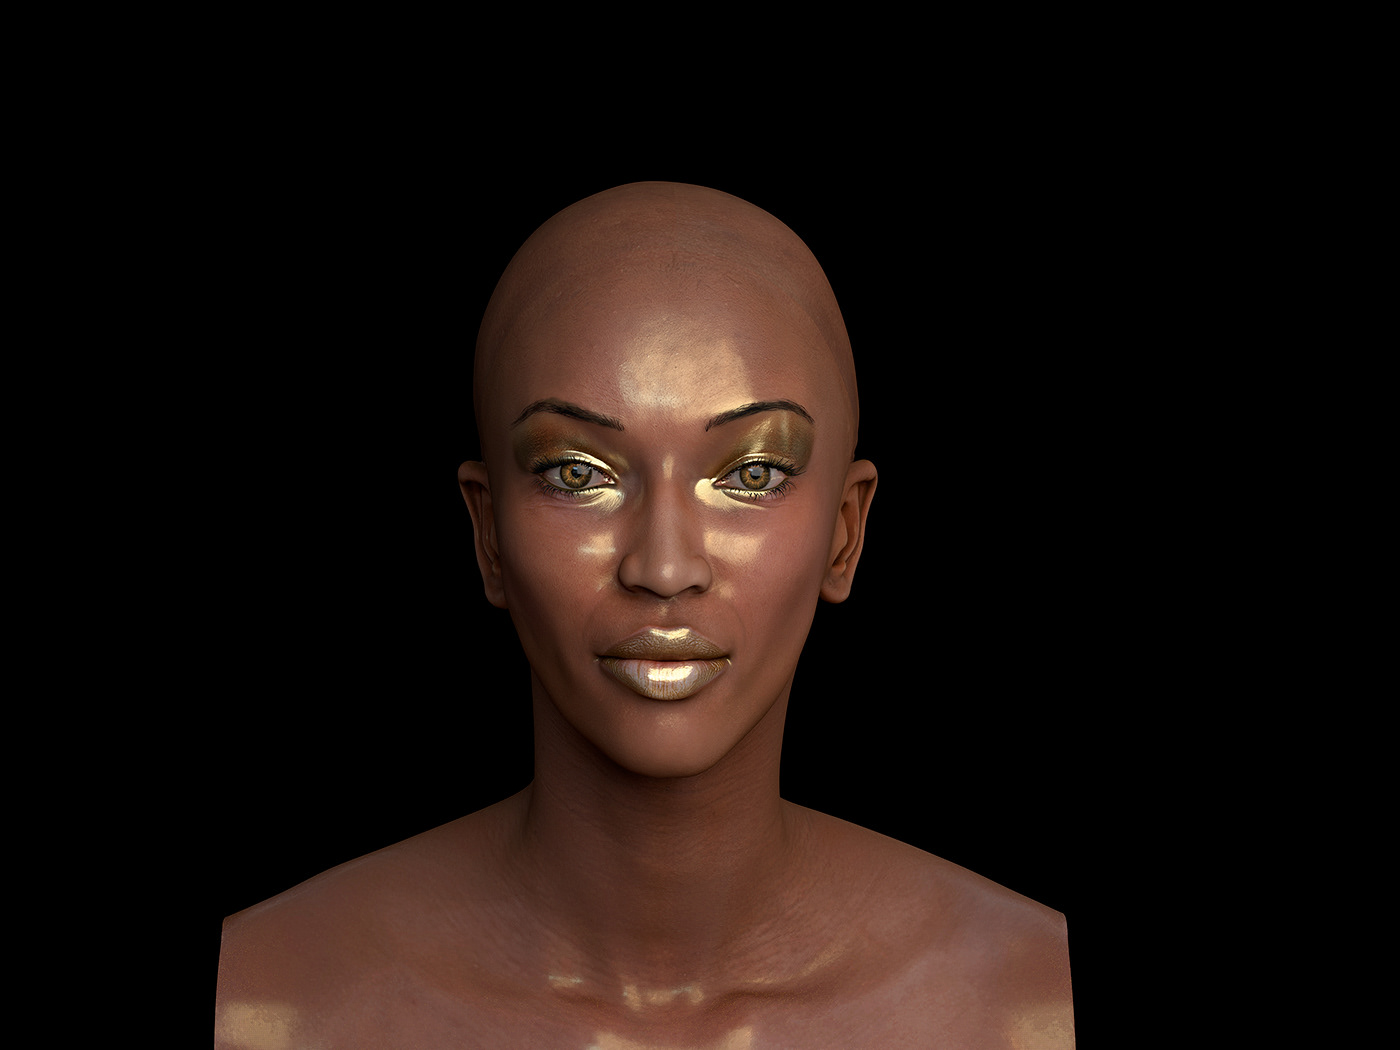 Naomi Campbell sculpting  head Vip model 3d art portrait woman face skin